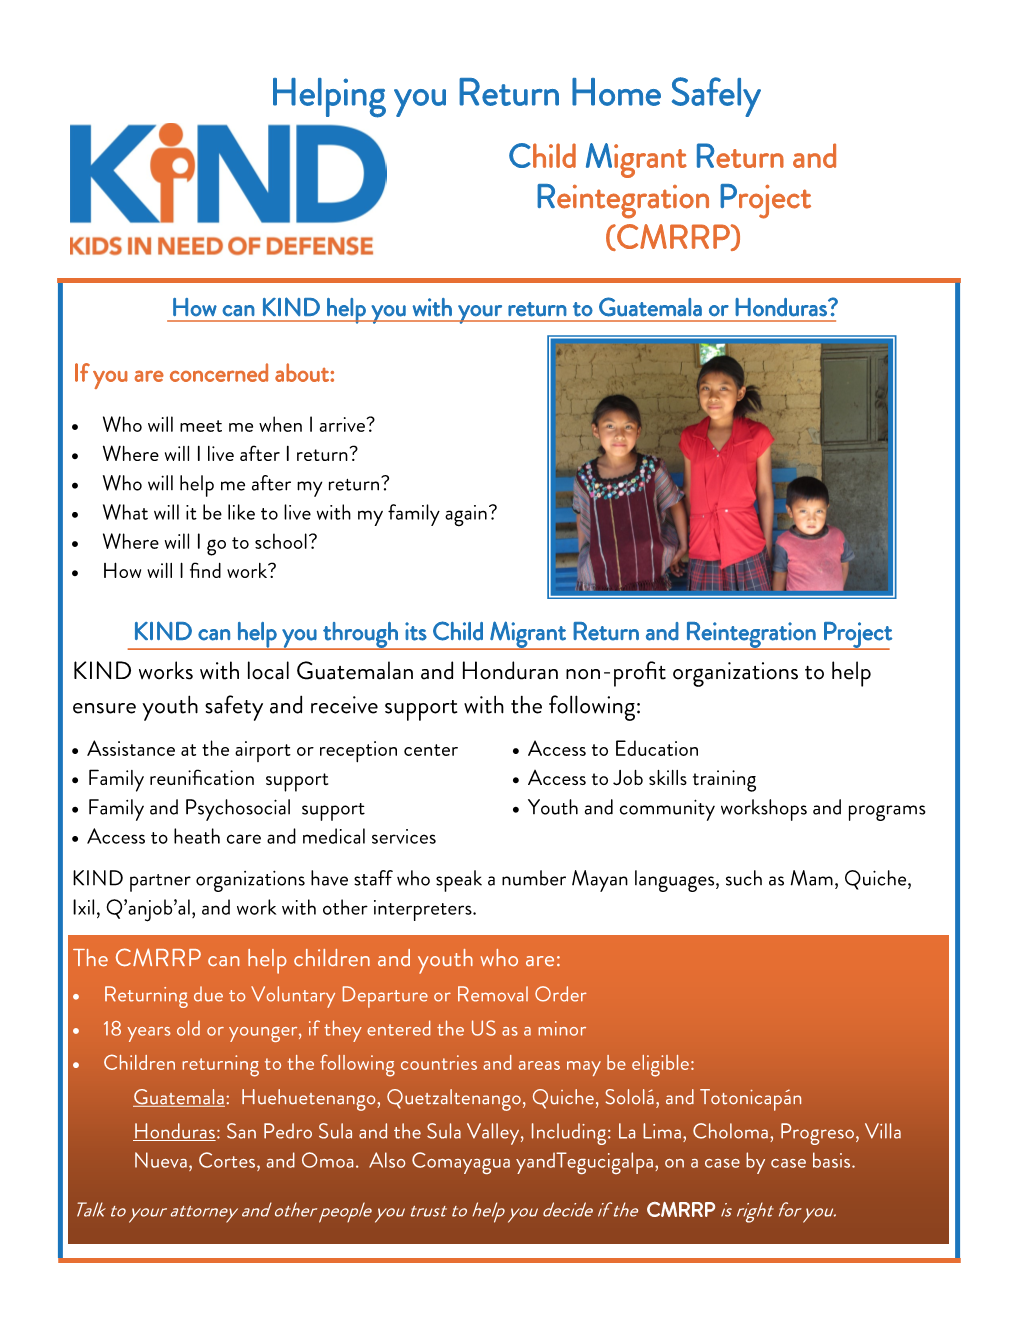 Child Migrant Return & Reintegration Project